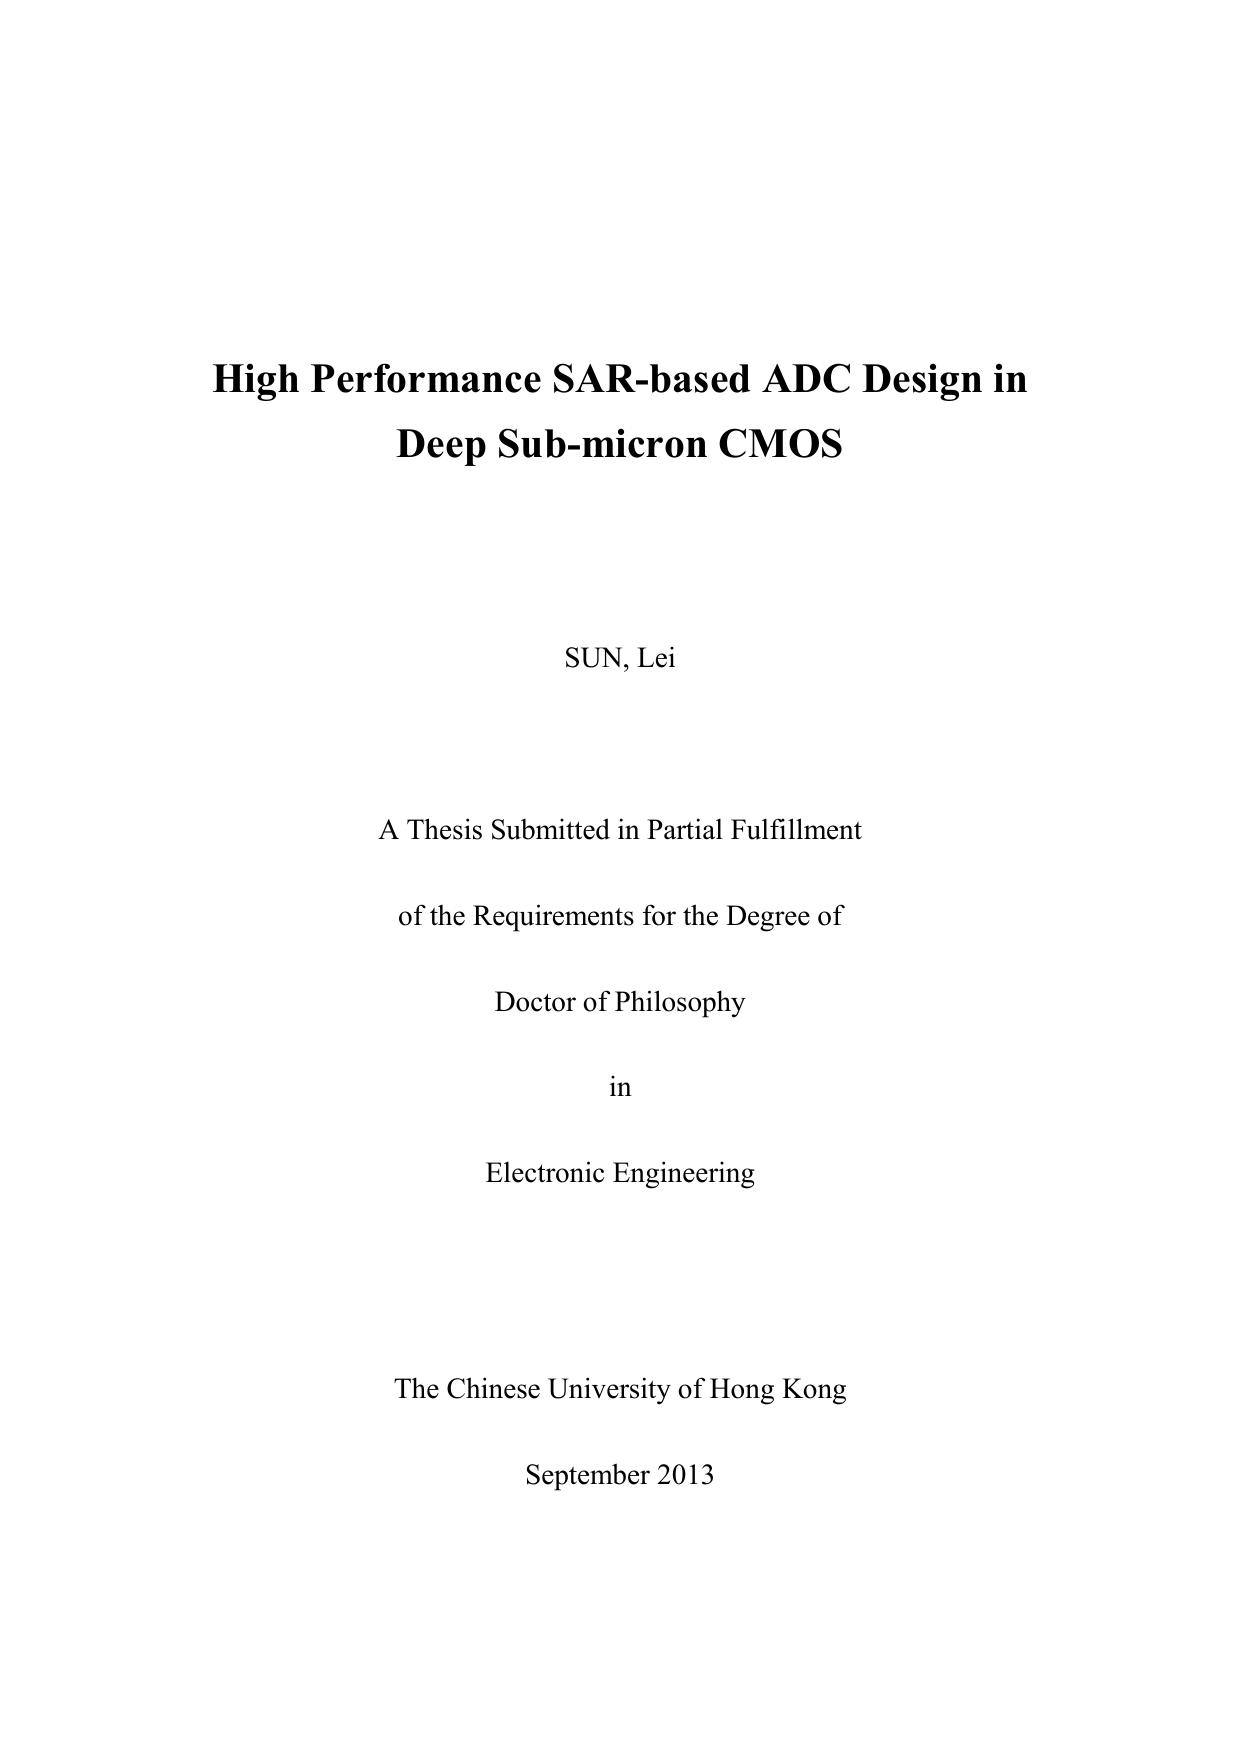 High Performance SAR-based ADC Design in Deep Sub-micron CMOS